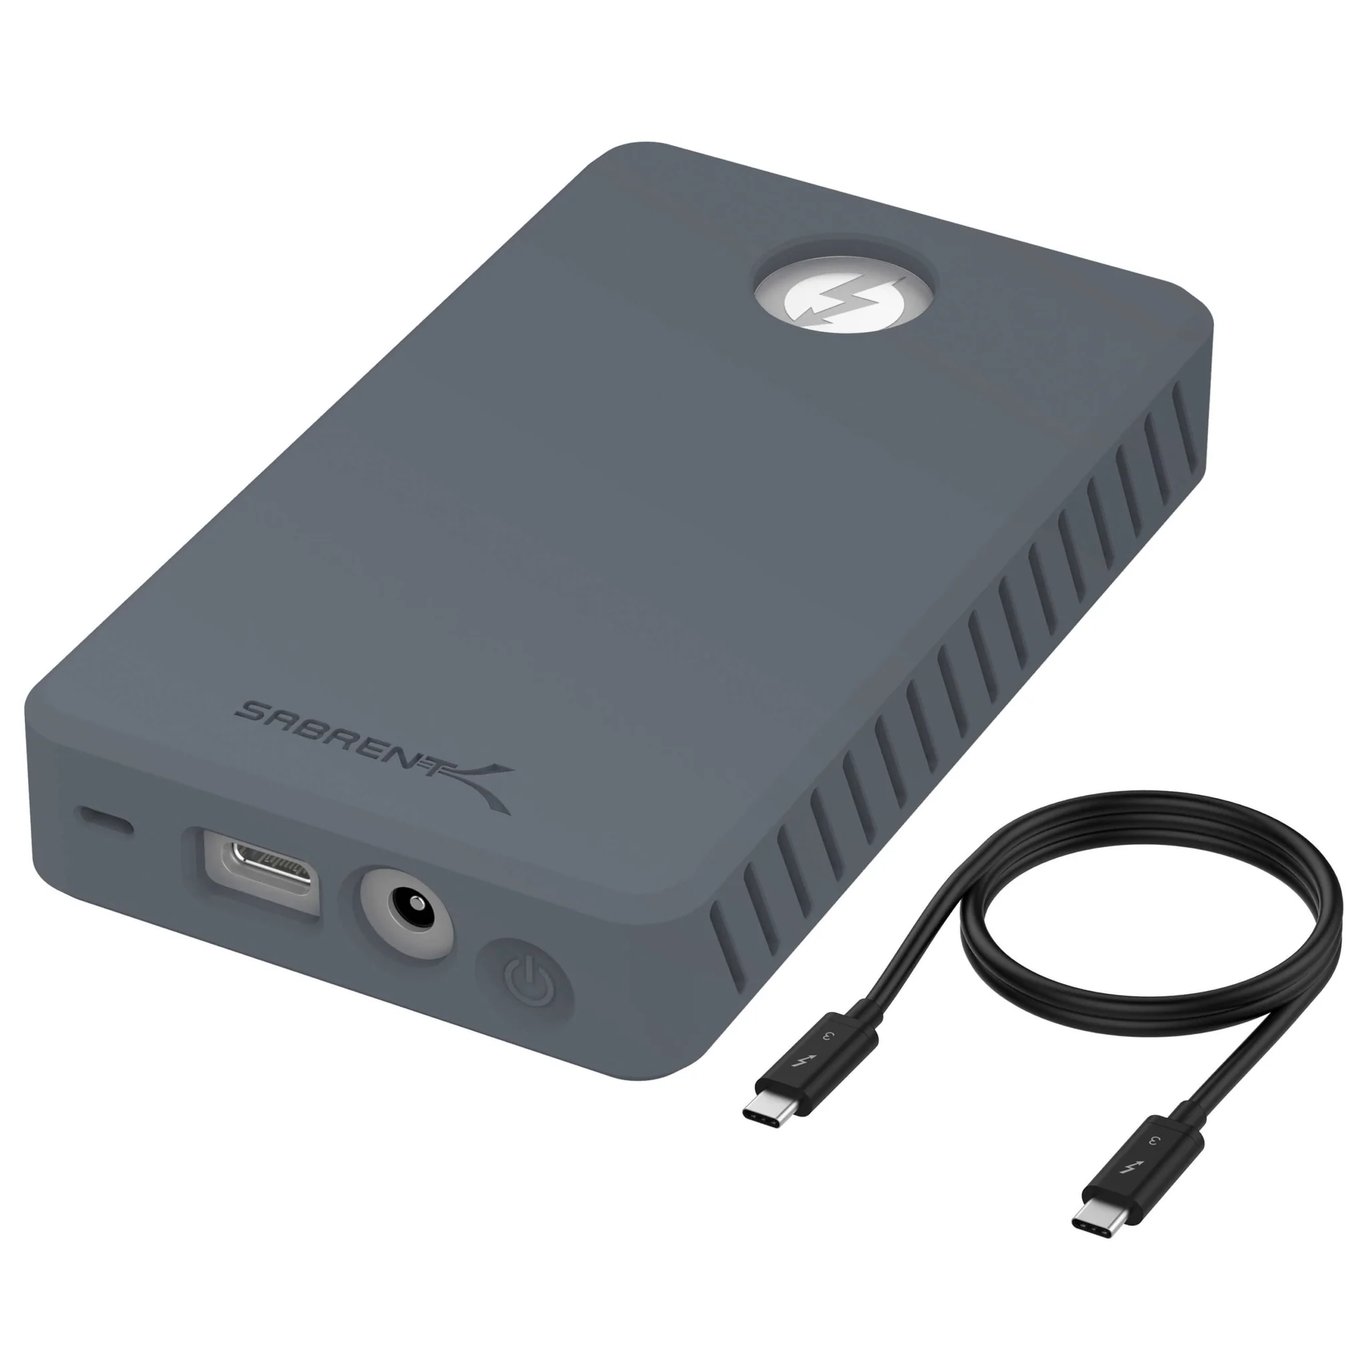 Sabrent EC-T3DN Thunderbolt 3 USB-C to M.2 雙槽 NVMe SSD 外置盒